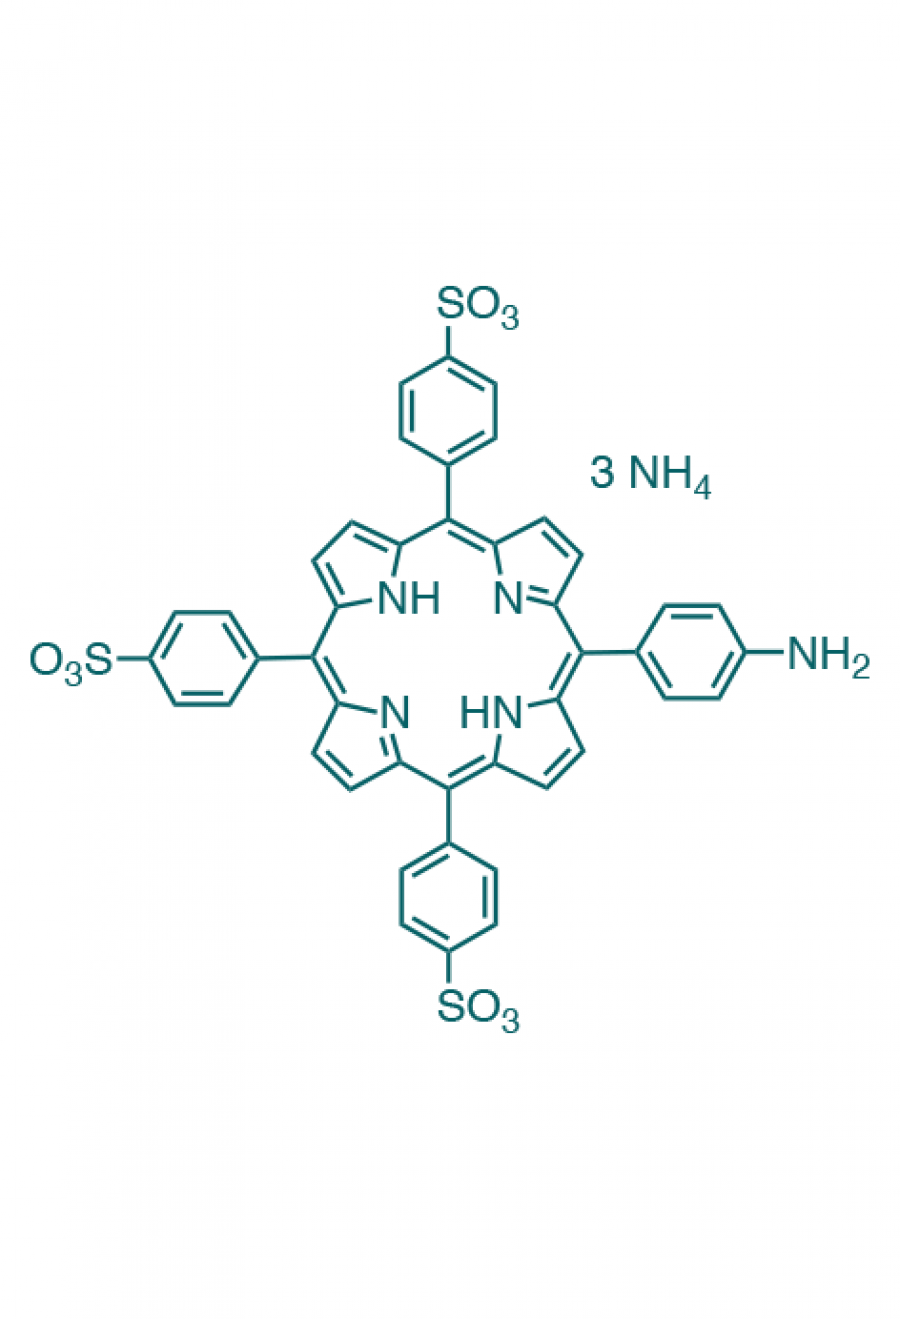 5-(4-aminophenyl)-10,15,20-(tri-4-sulfonatophenyl)porphyrin triammonium  | Porphychem Expert porphyrin synthesis for research & industry